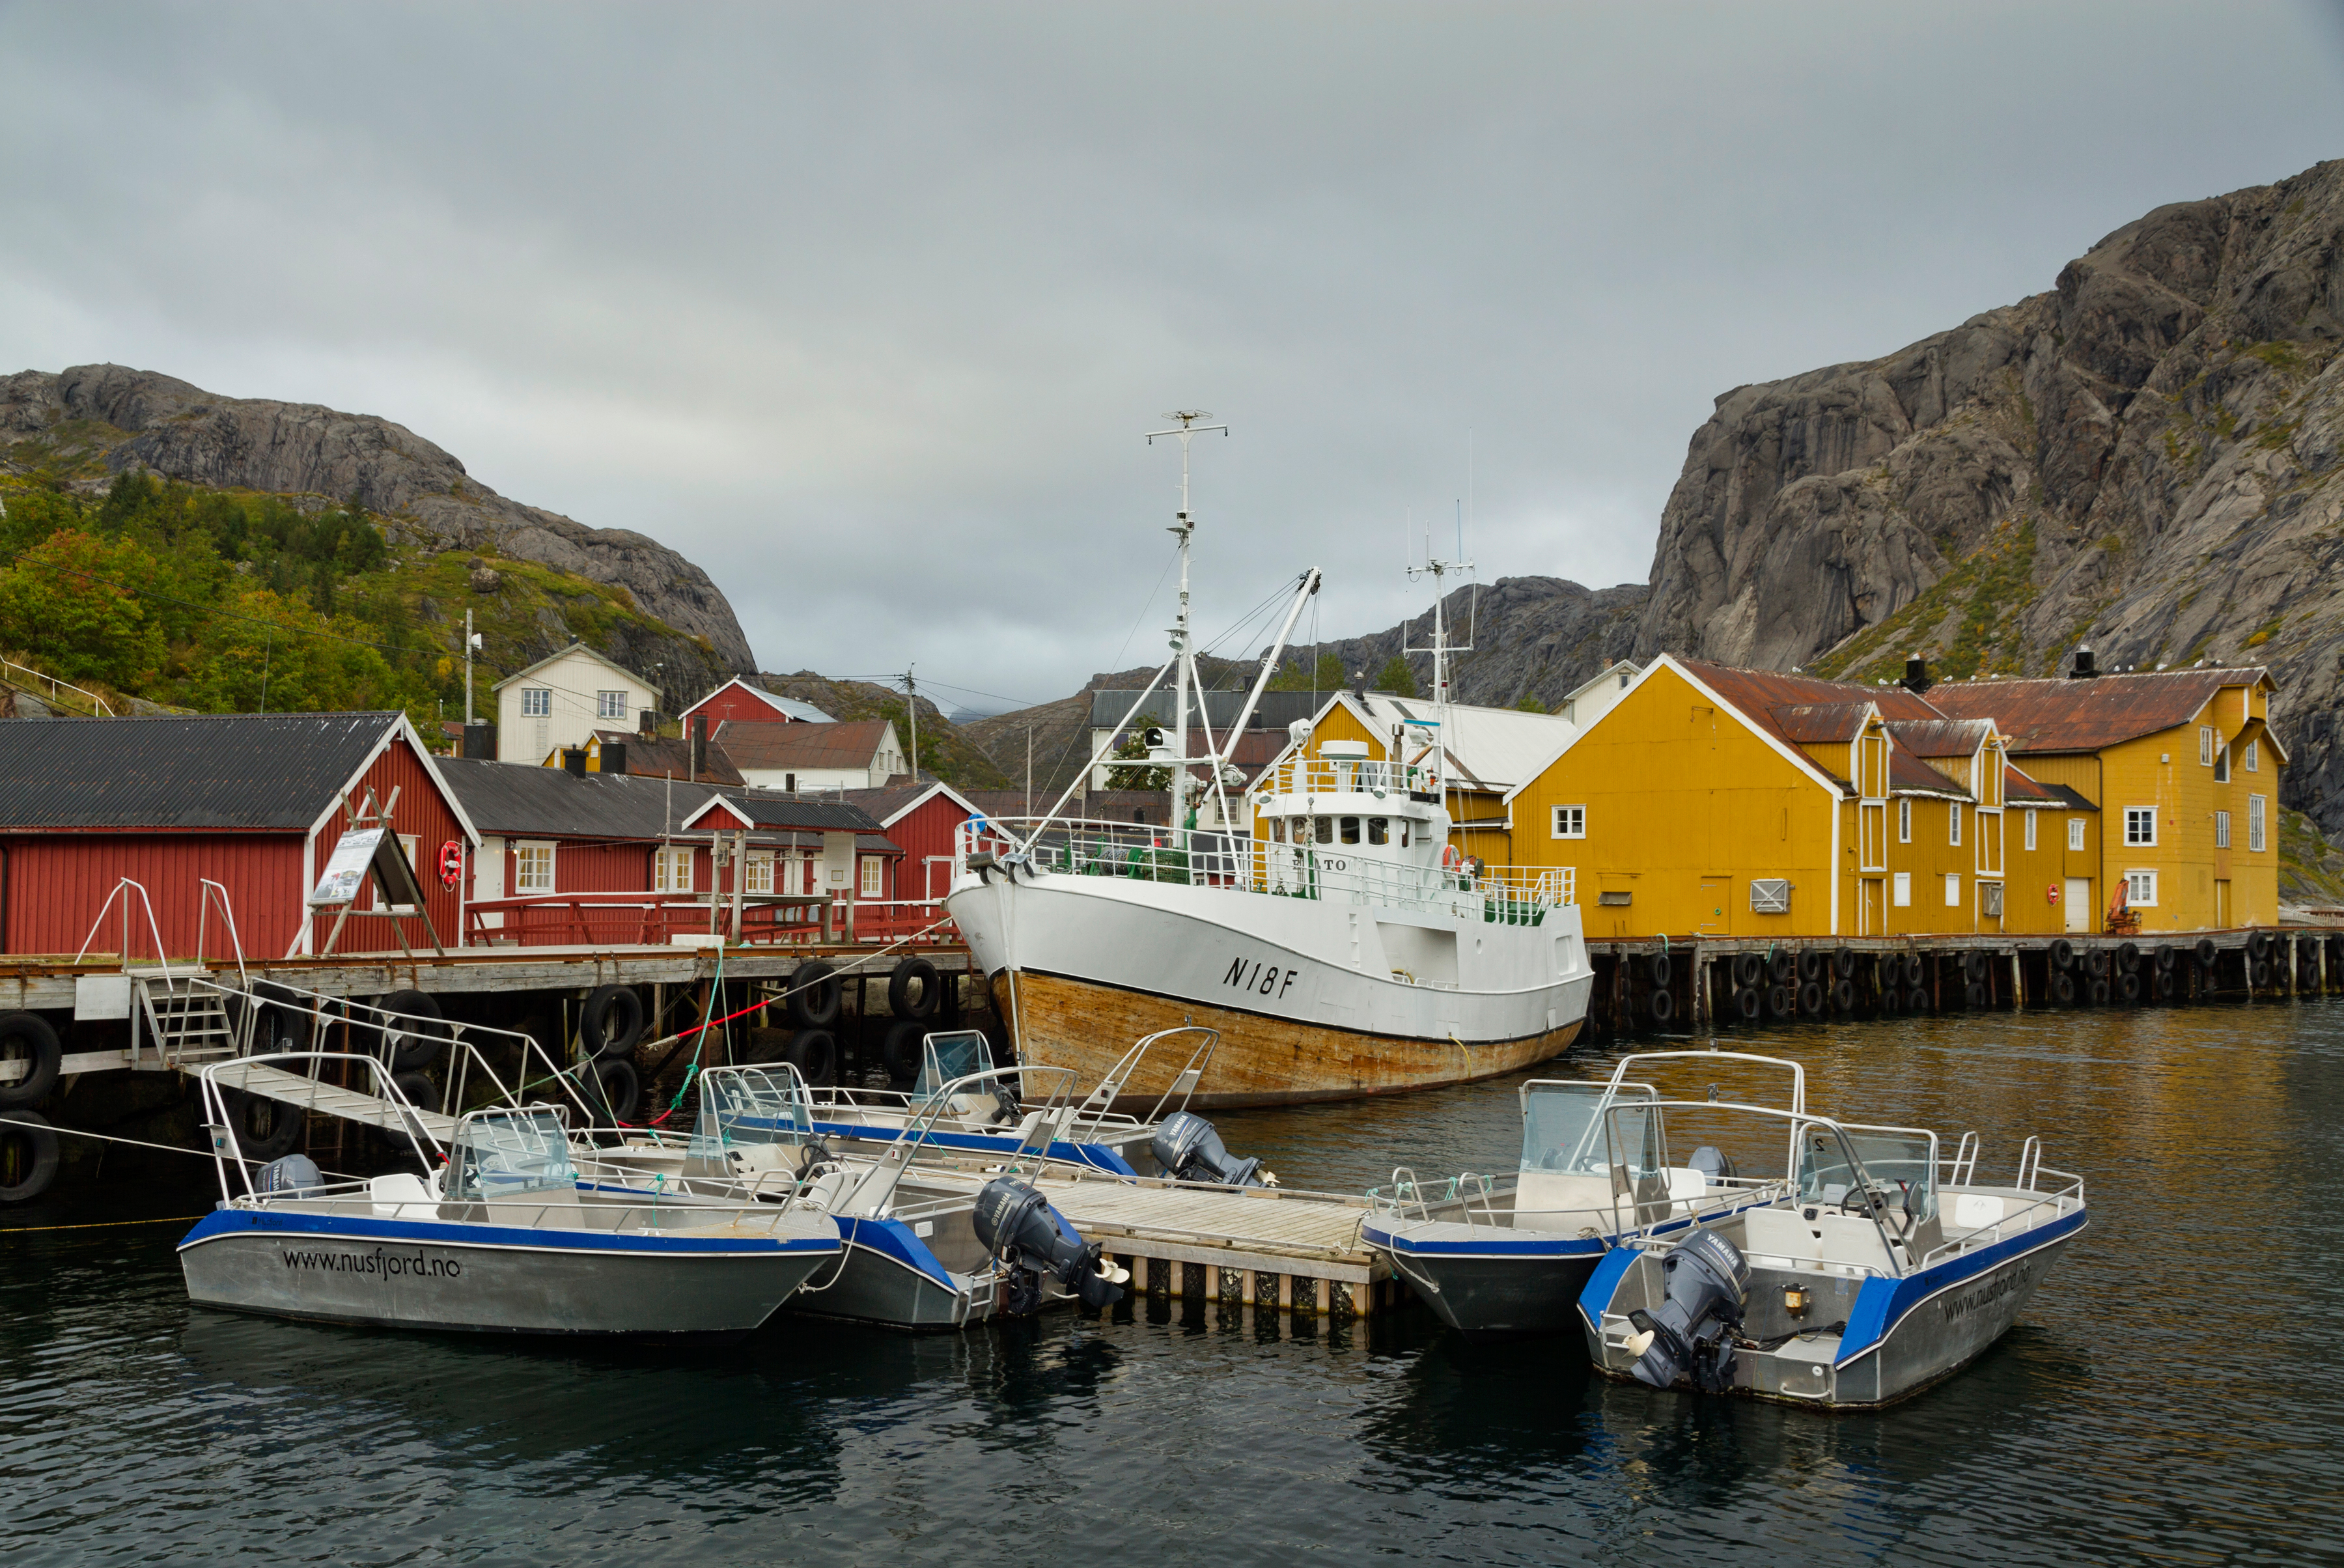 Boats in Nusfjord, Lofoten, Norway, 2015 September